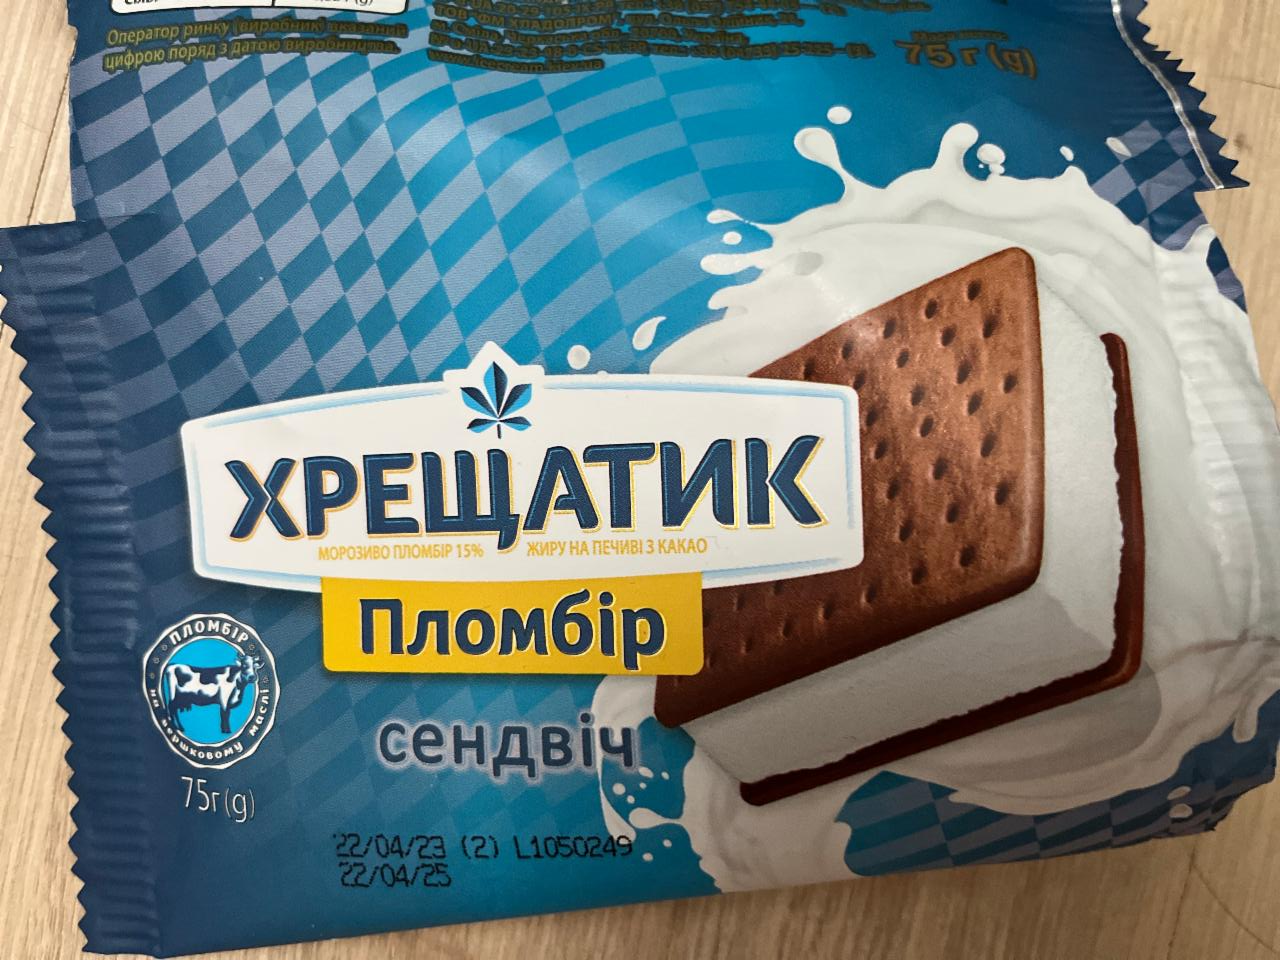 Фото - Мороженое пломбир 15% на печенье с какао Хрещатик